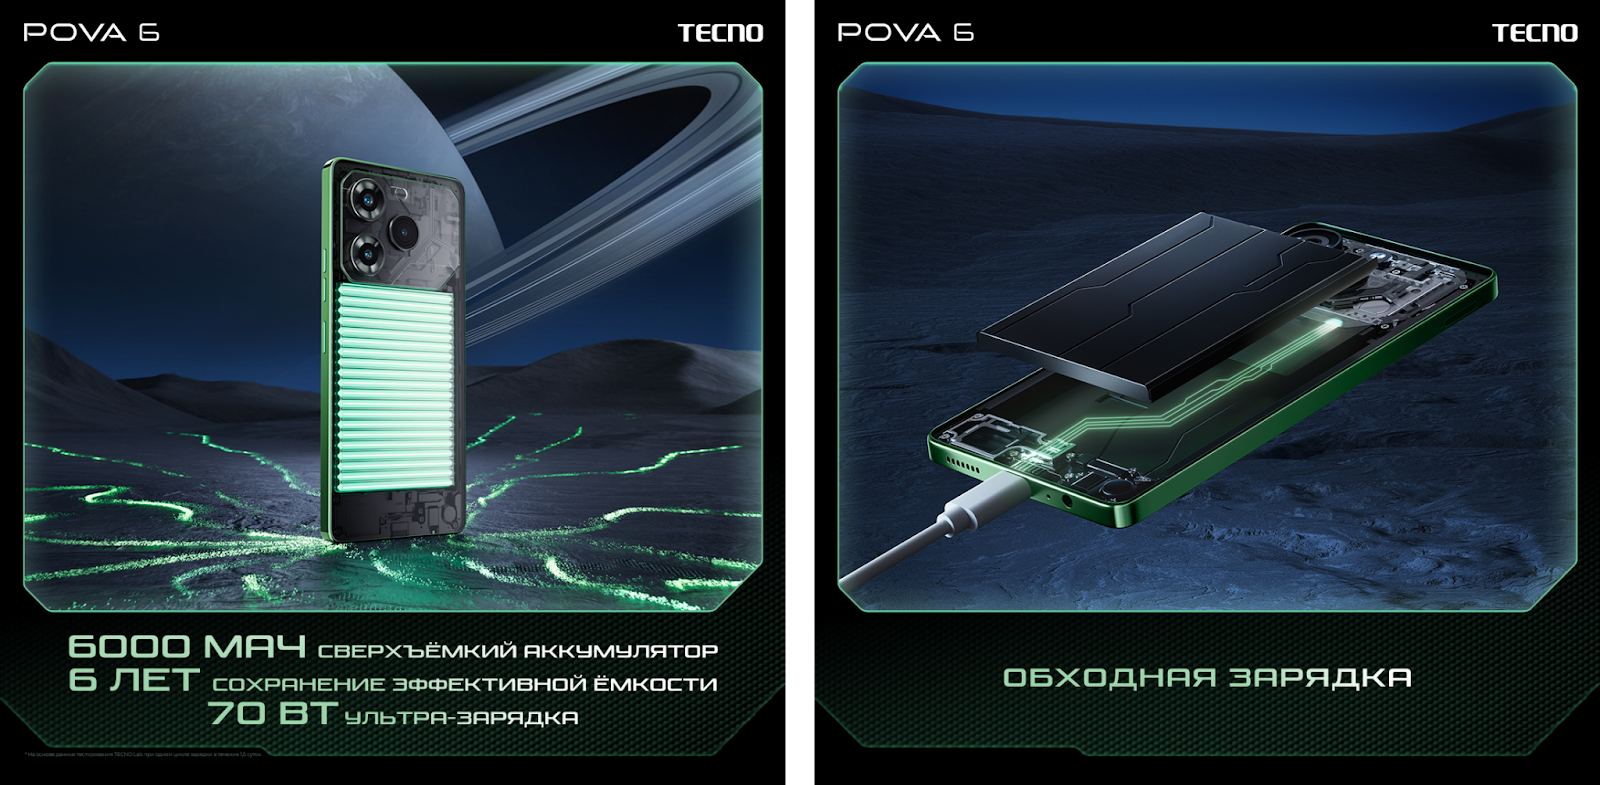 Tecno представил новые модели серии POVA 6 ()